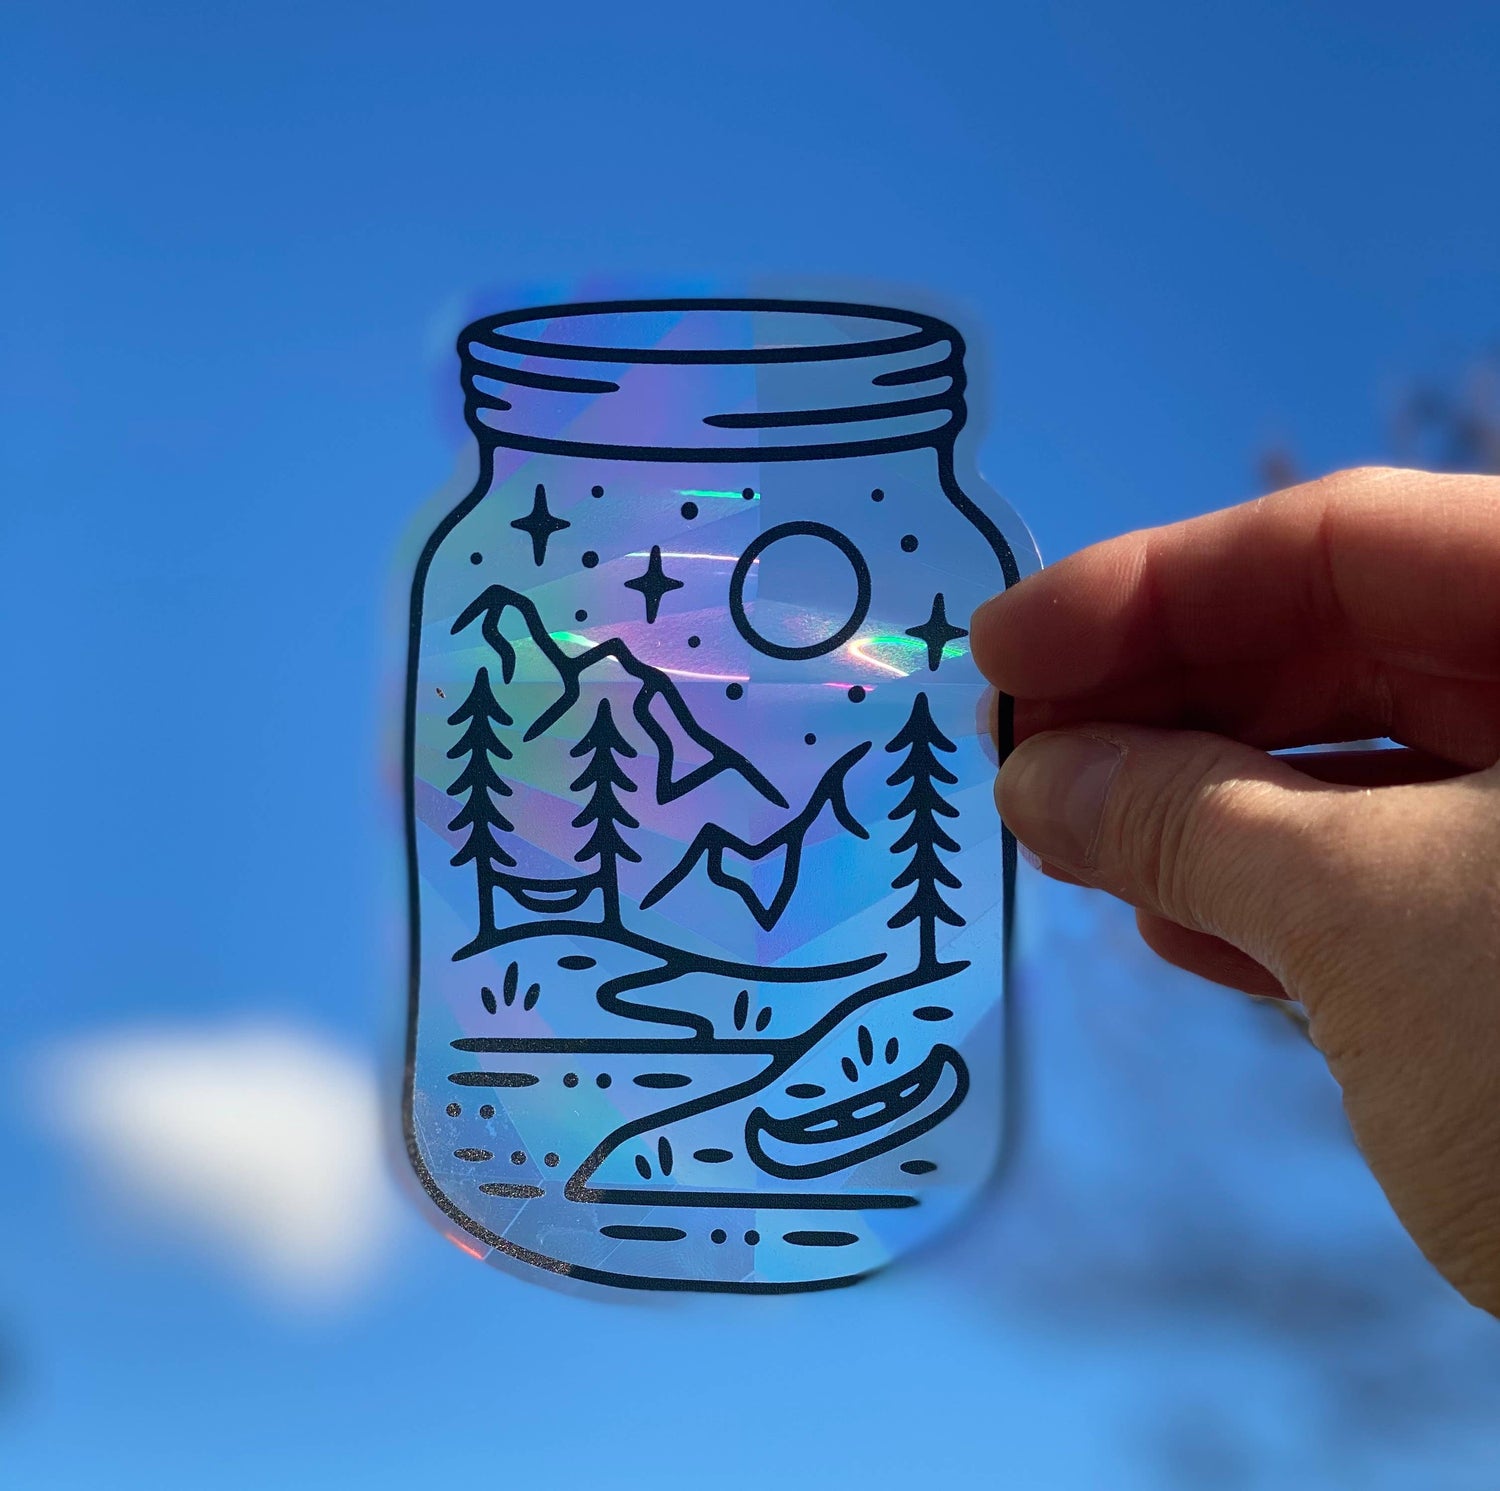 Mason jar shaped suncatcher with mountain lake scene design by Good + Well Supply Co